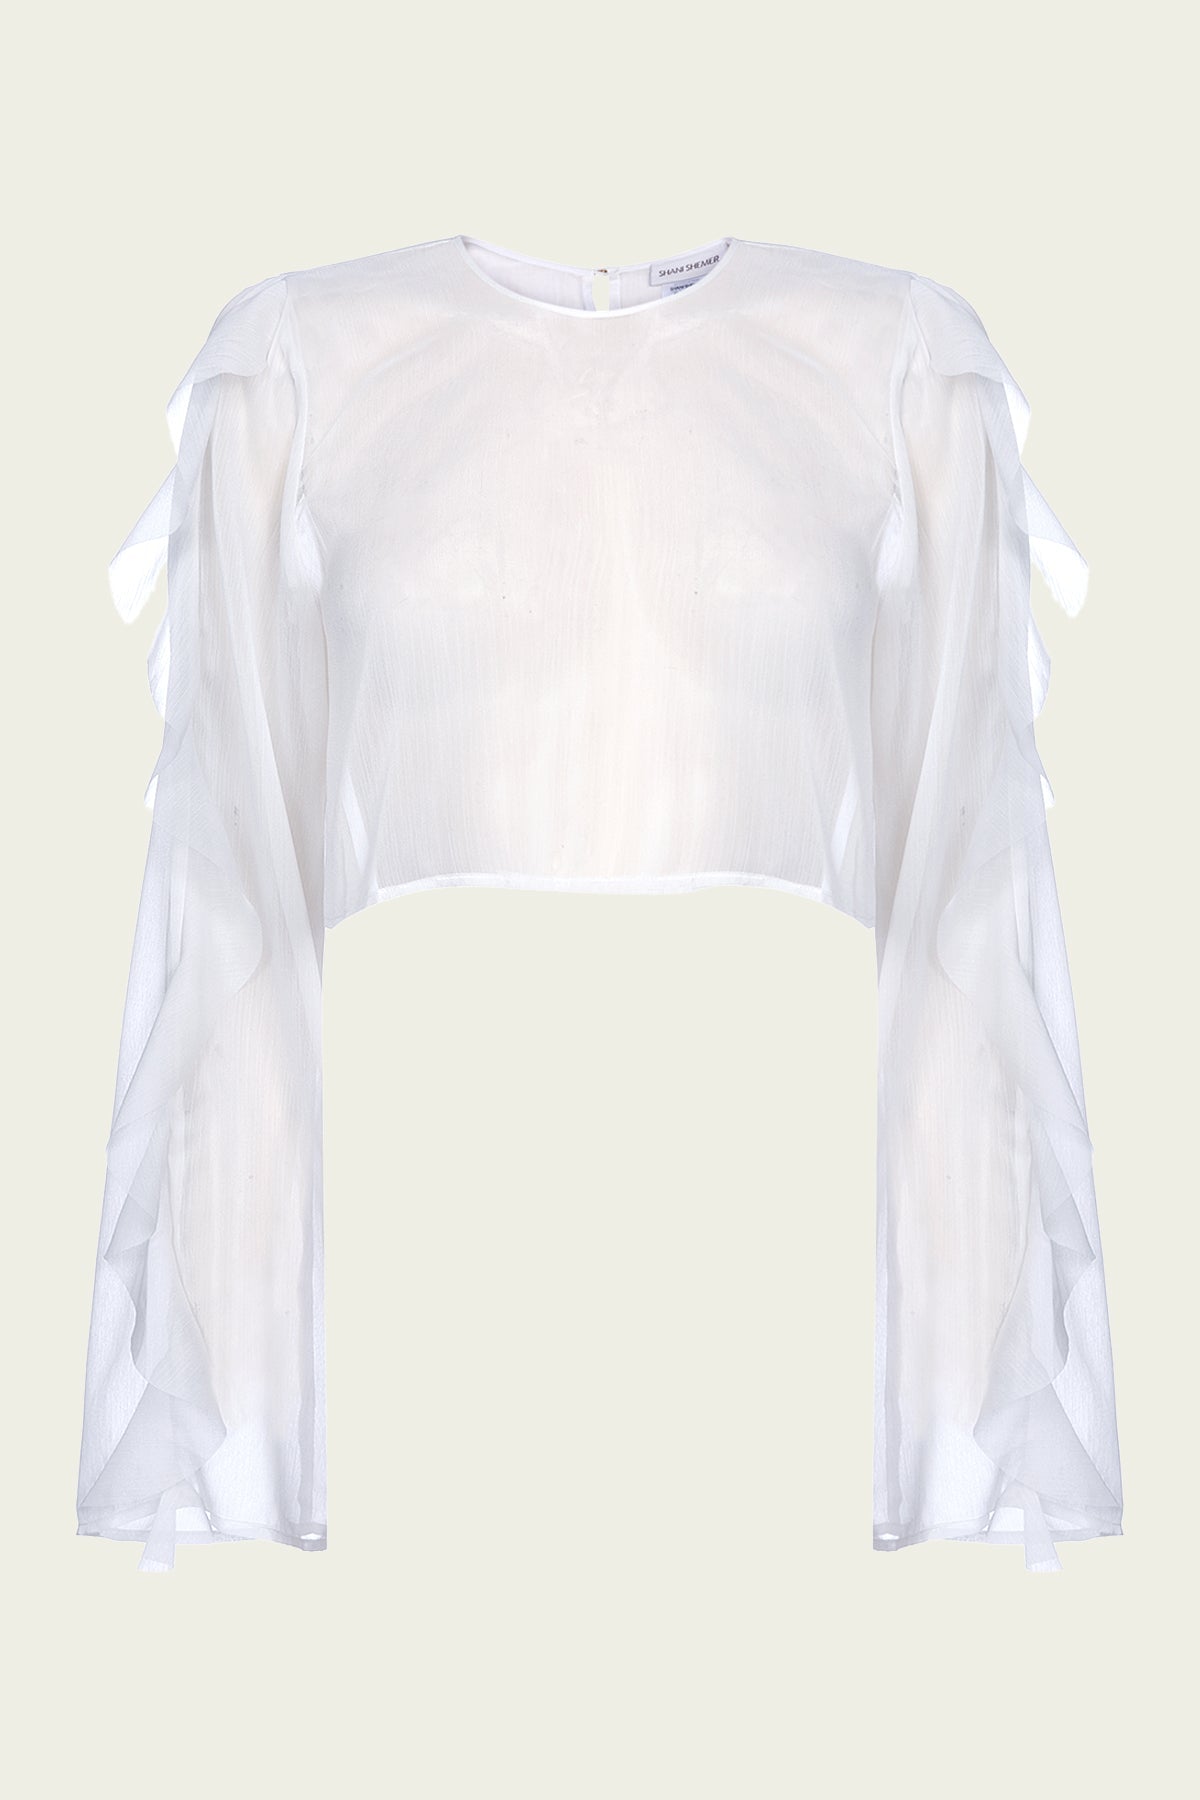 Thoma Cropped Shirt in Cream - shop-olivia.com